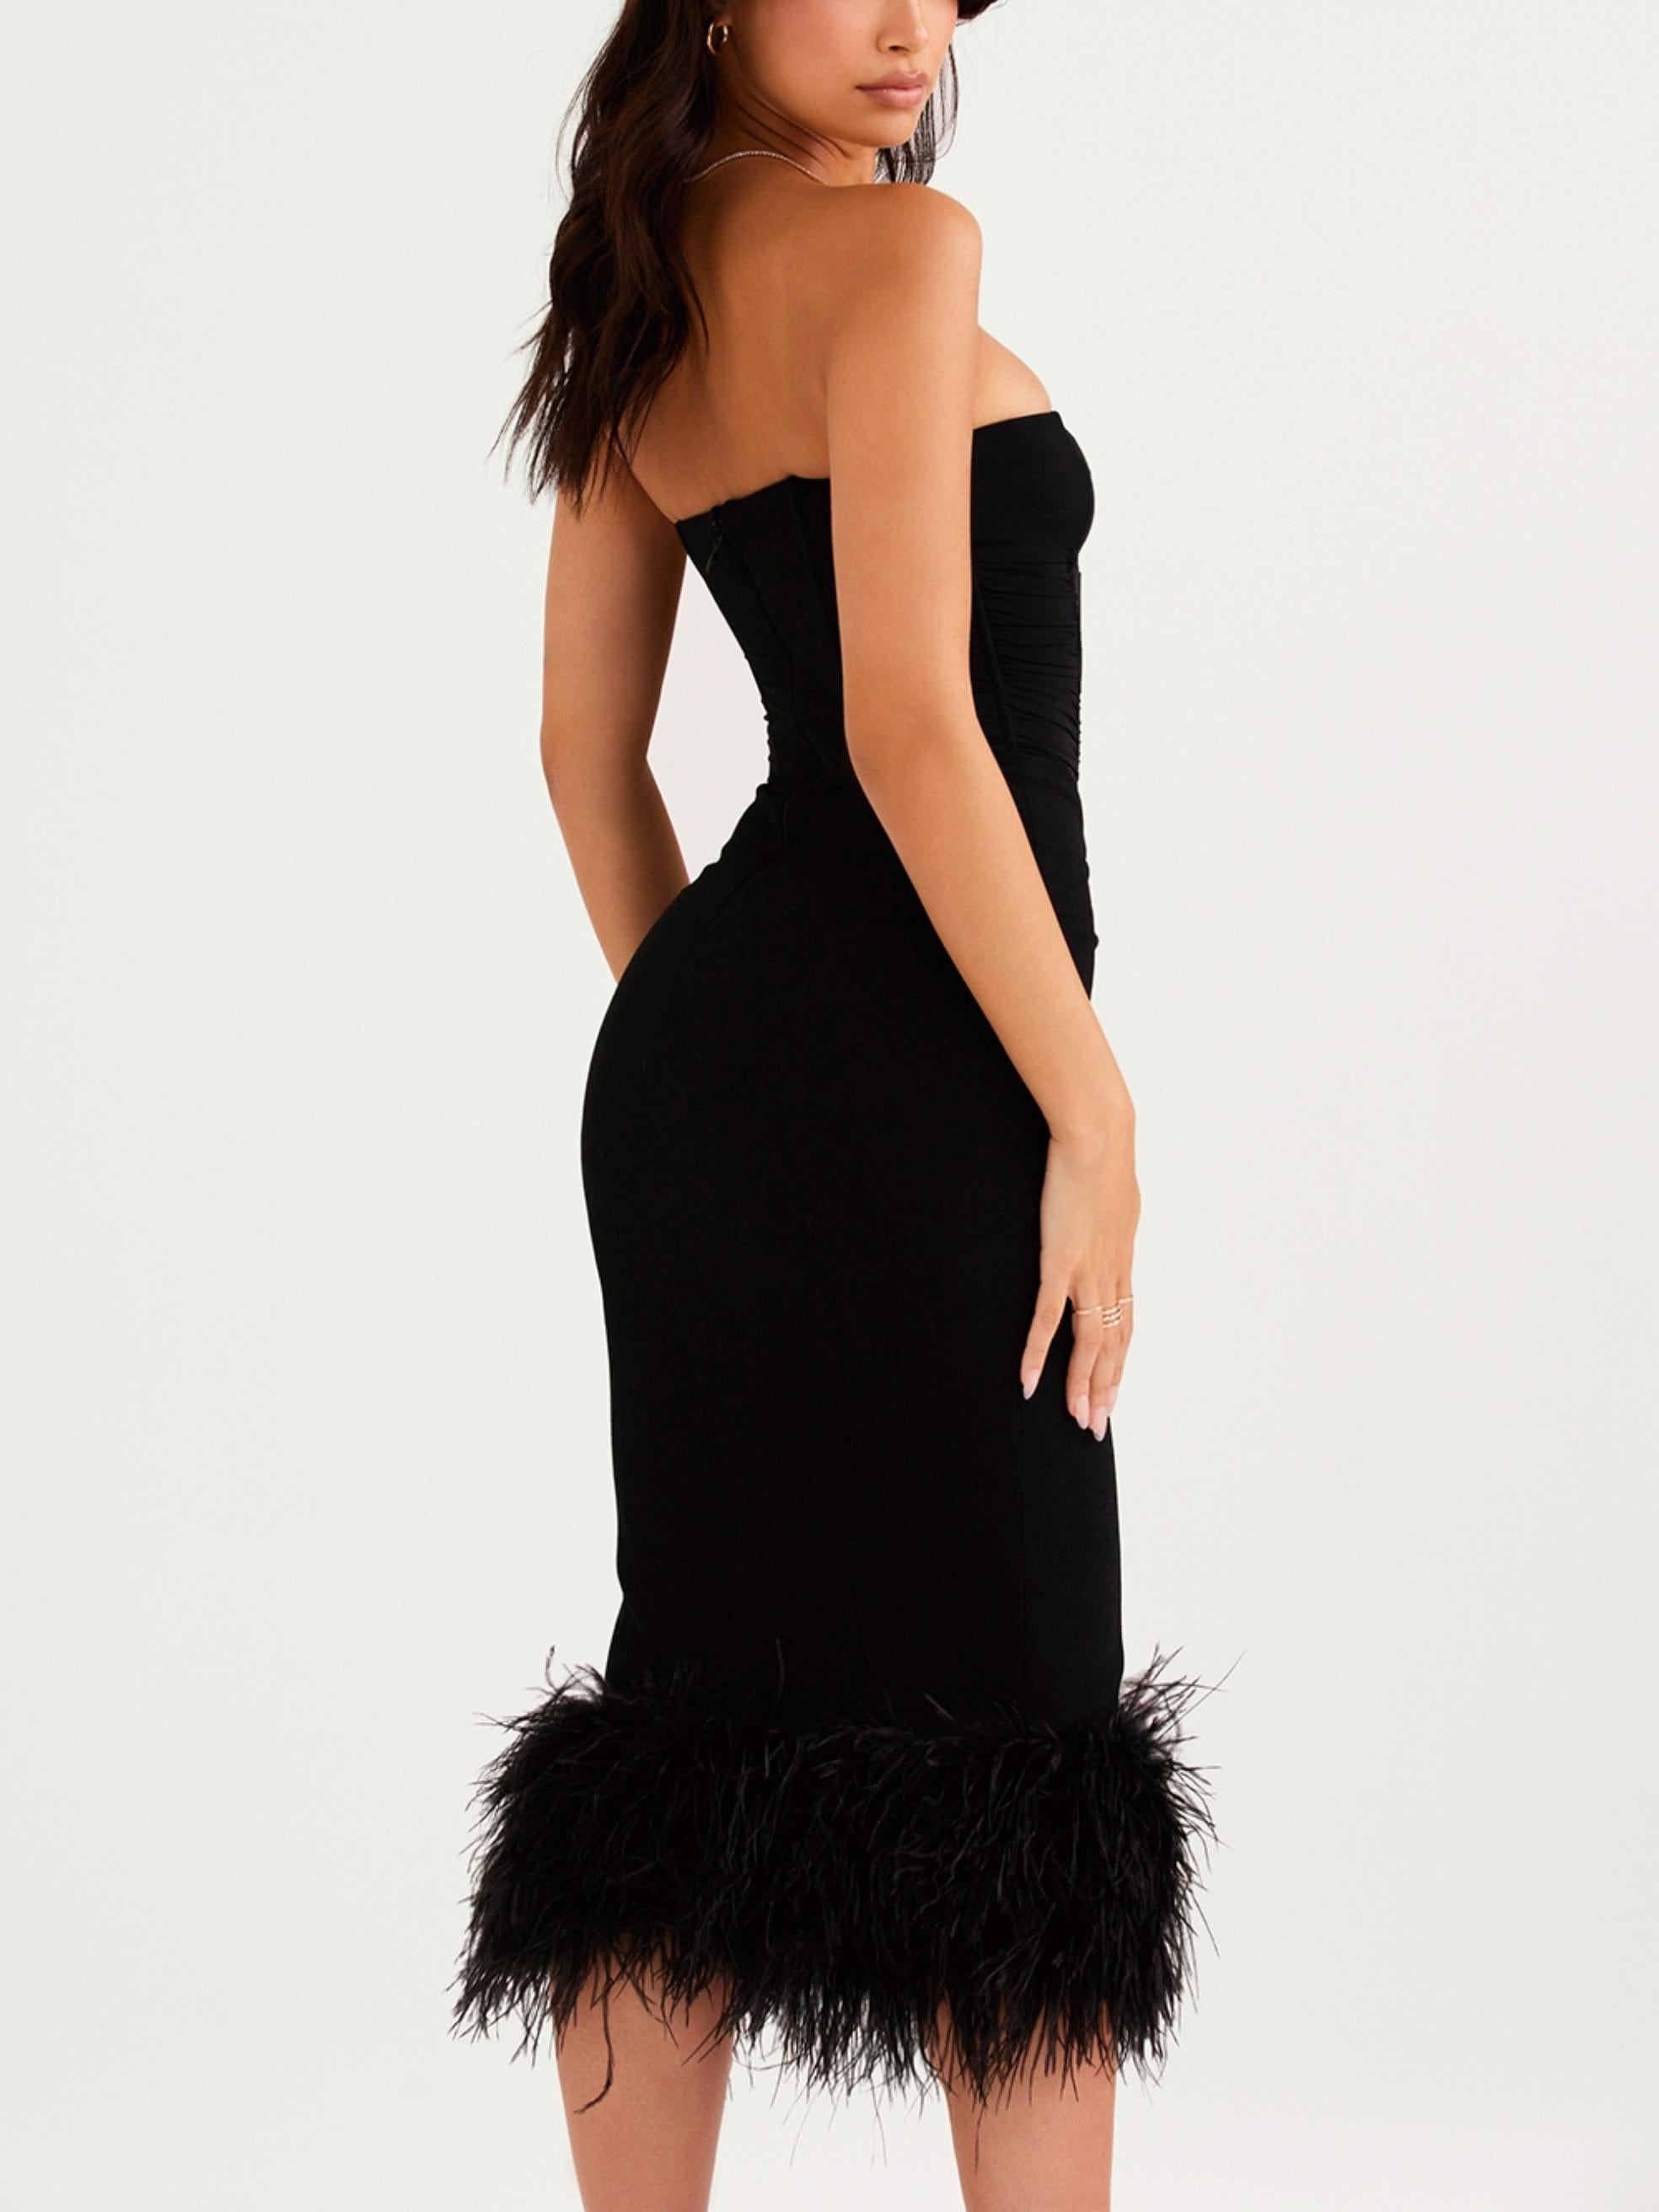 Fionula Black Strapless Corset Dress